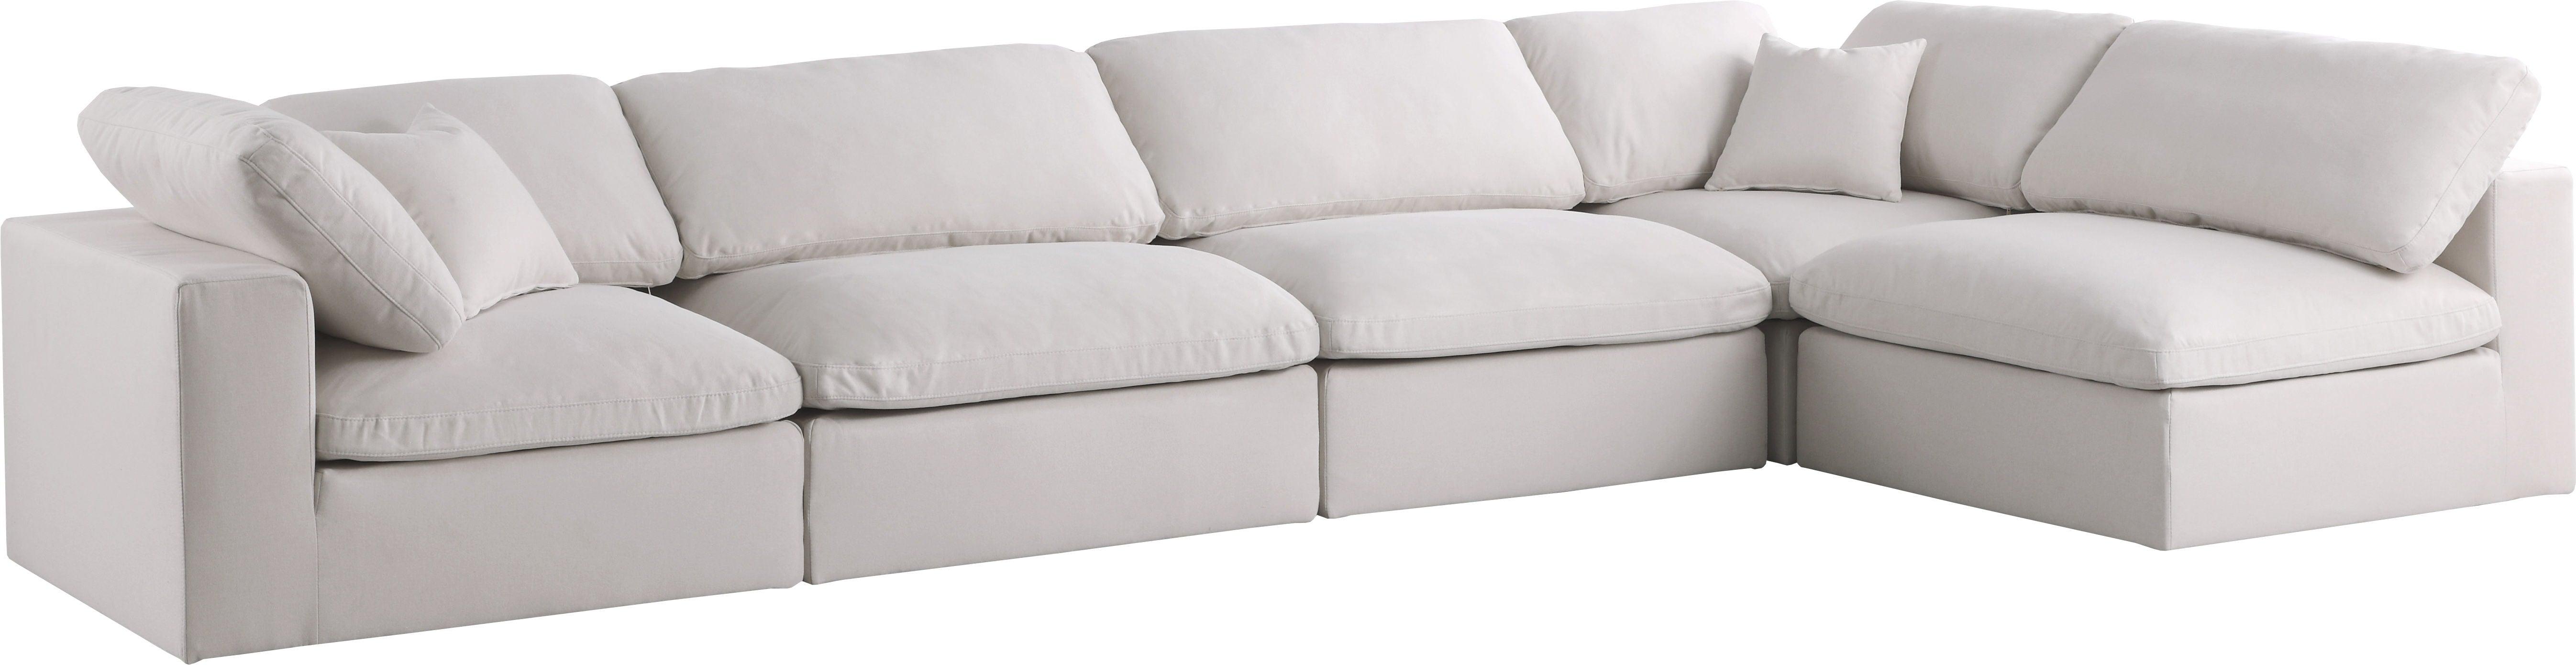 Meridian Furniture - Plush - Velvet Standart Comfort Modular Sectional 5 Piece - Cream - 5th Avenue Furniture